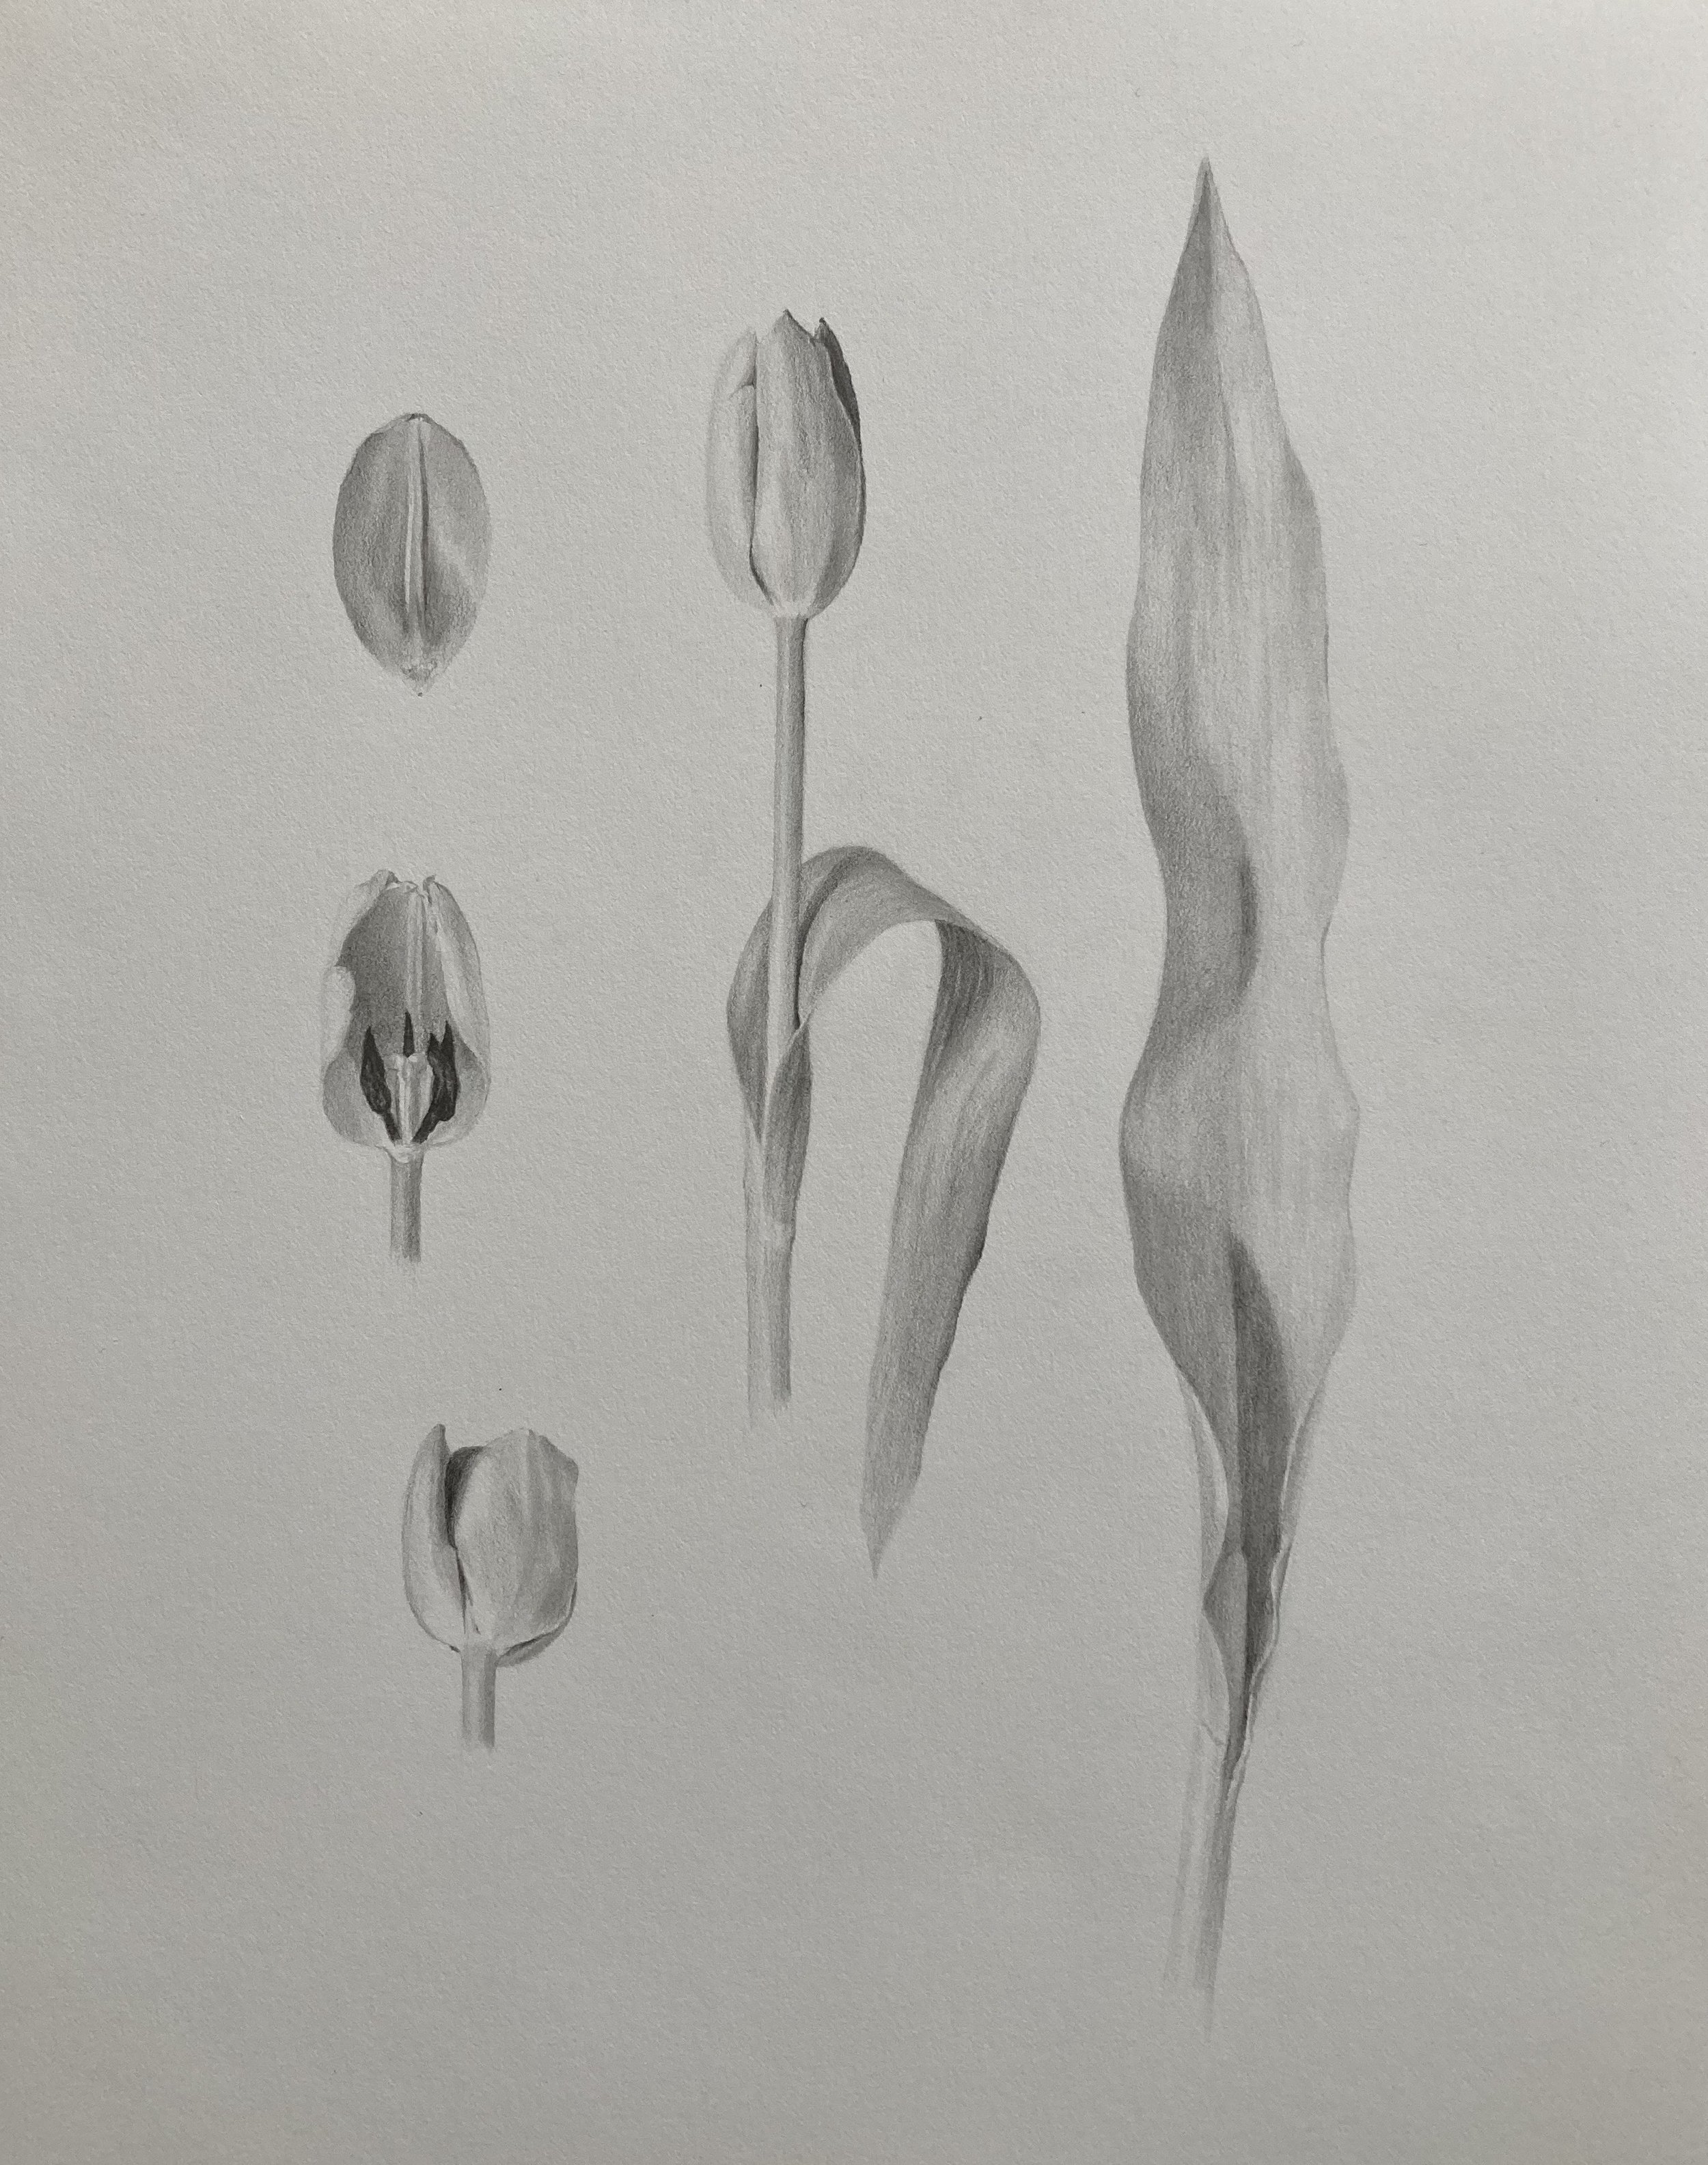   Tulip   Graphite on paper  10 in x 14 in 